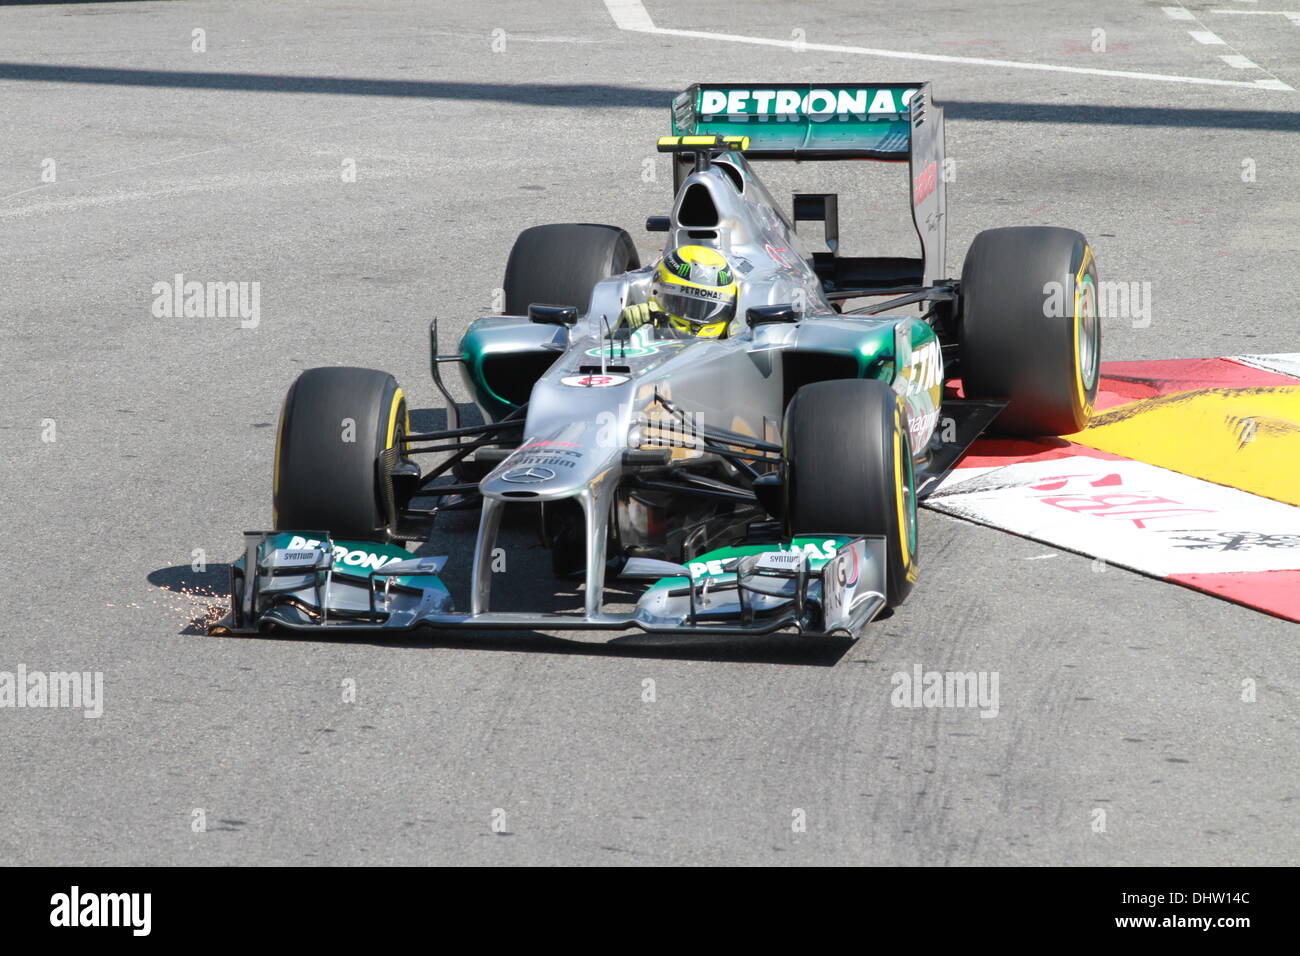 Nico Rosberg - Mercedes F1 - Formula One Grand Prix - Monaco - Practice Monaco - 24.05.12 Stock Photo